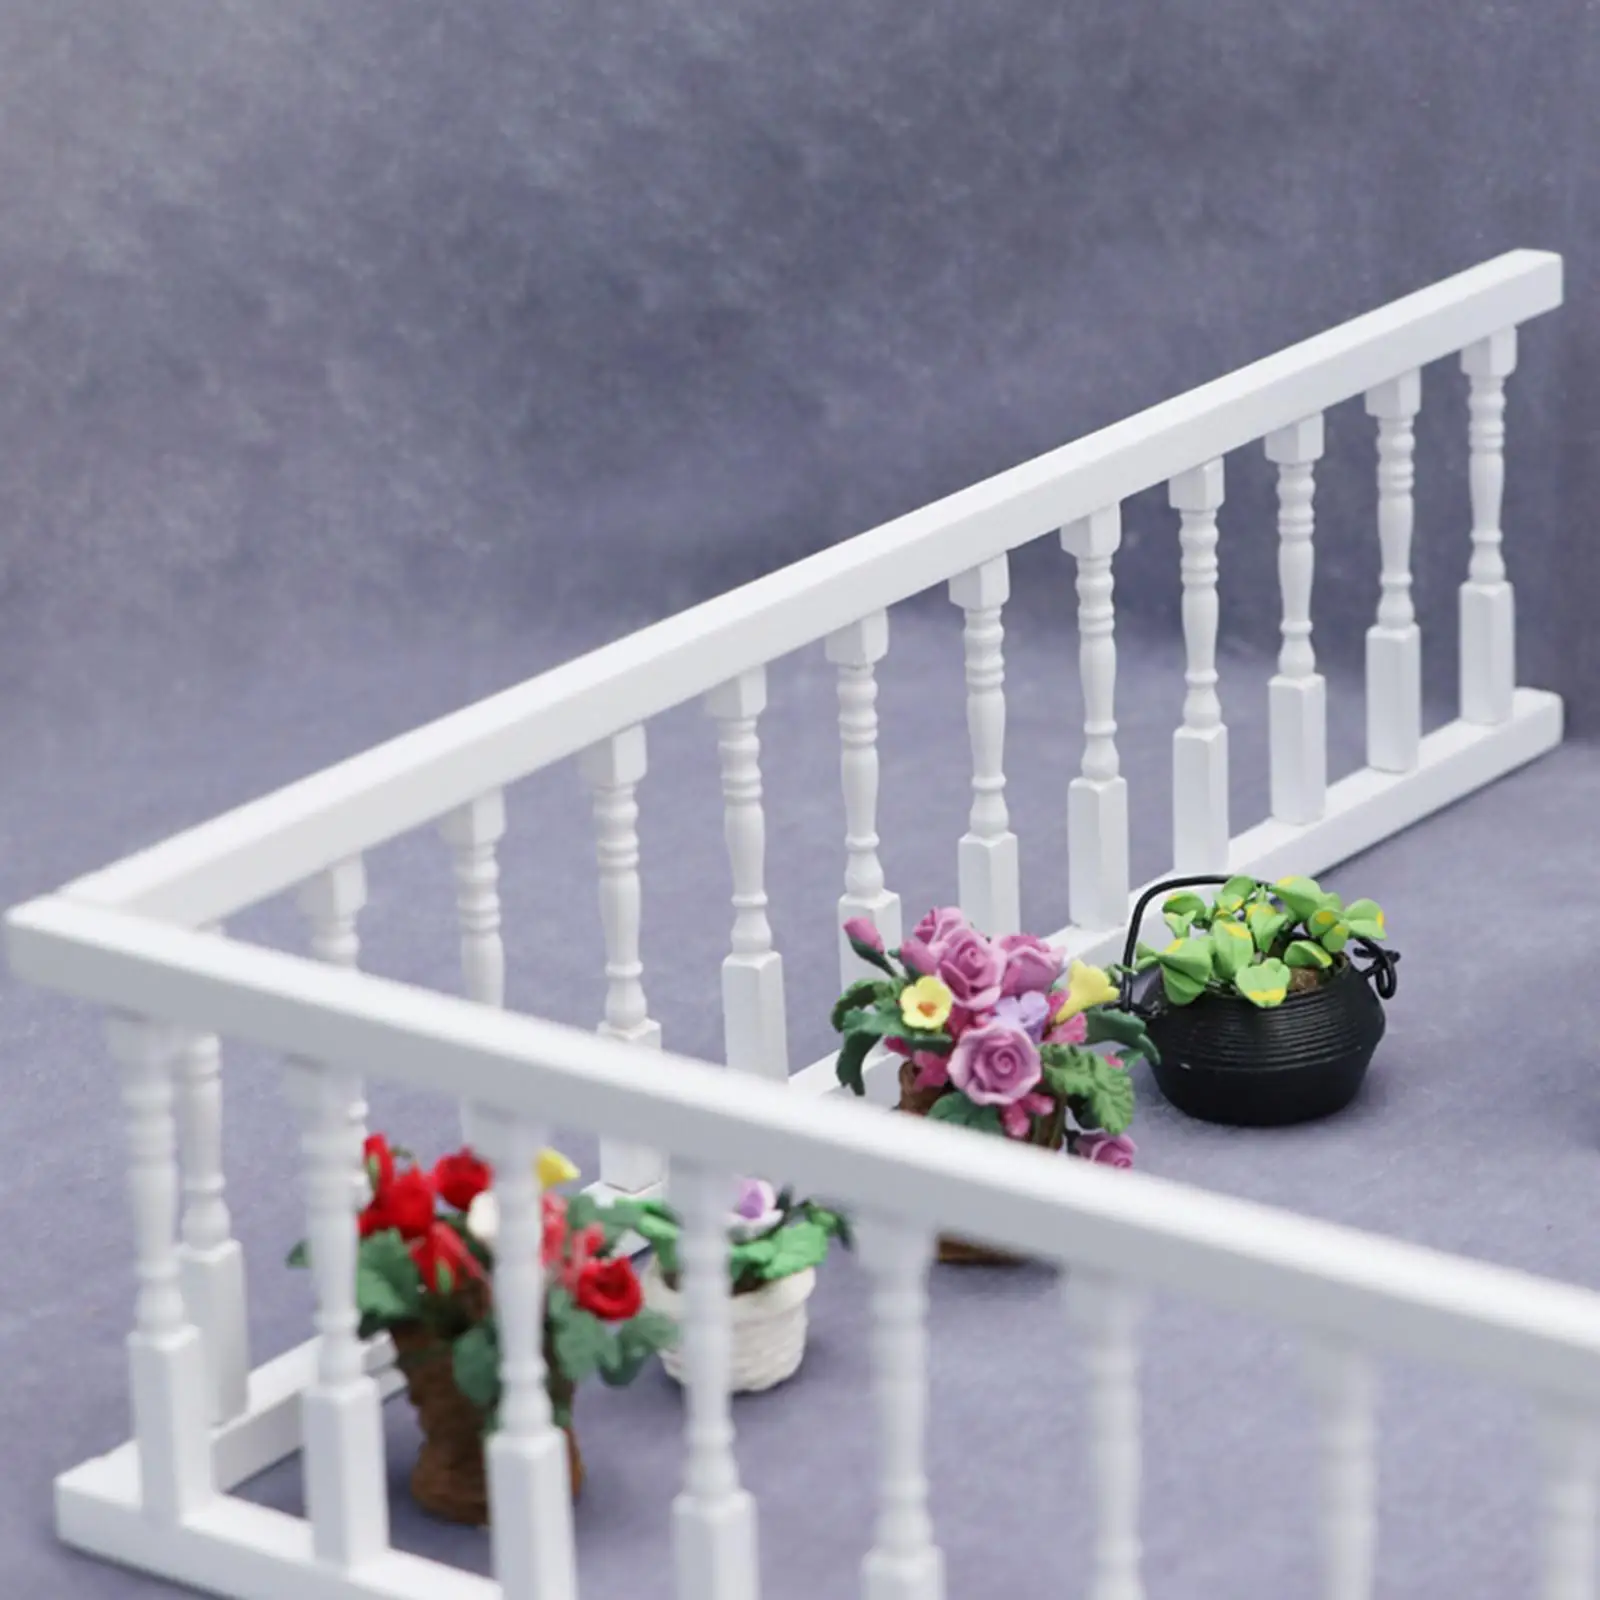 Miniature Wooden Fence Handrail Garden Micro Landscape Accessories 1:12 Scale Dollhouse Railing Decor Scenery Supplies